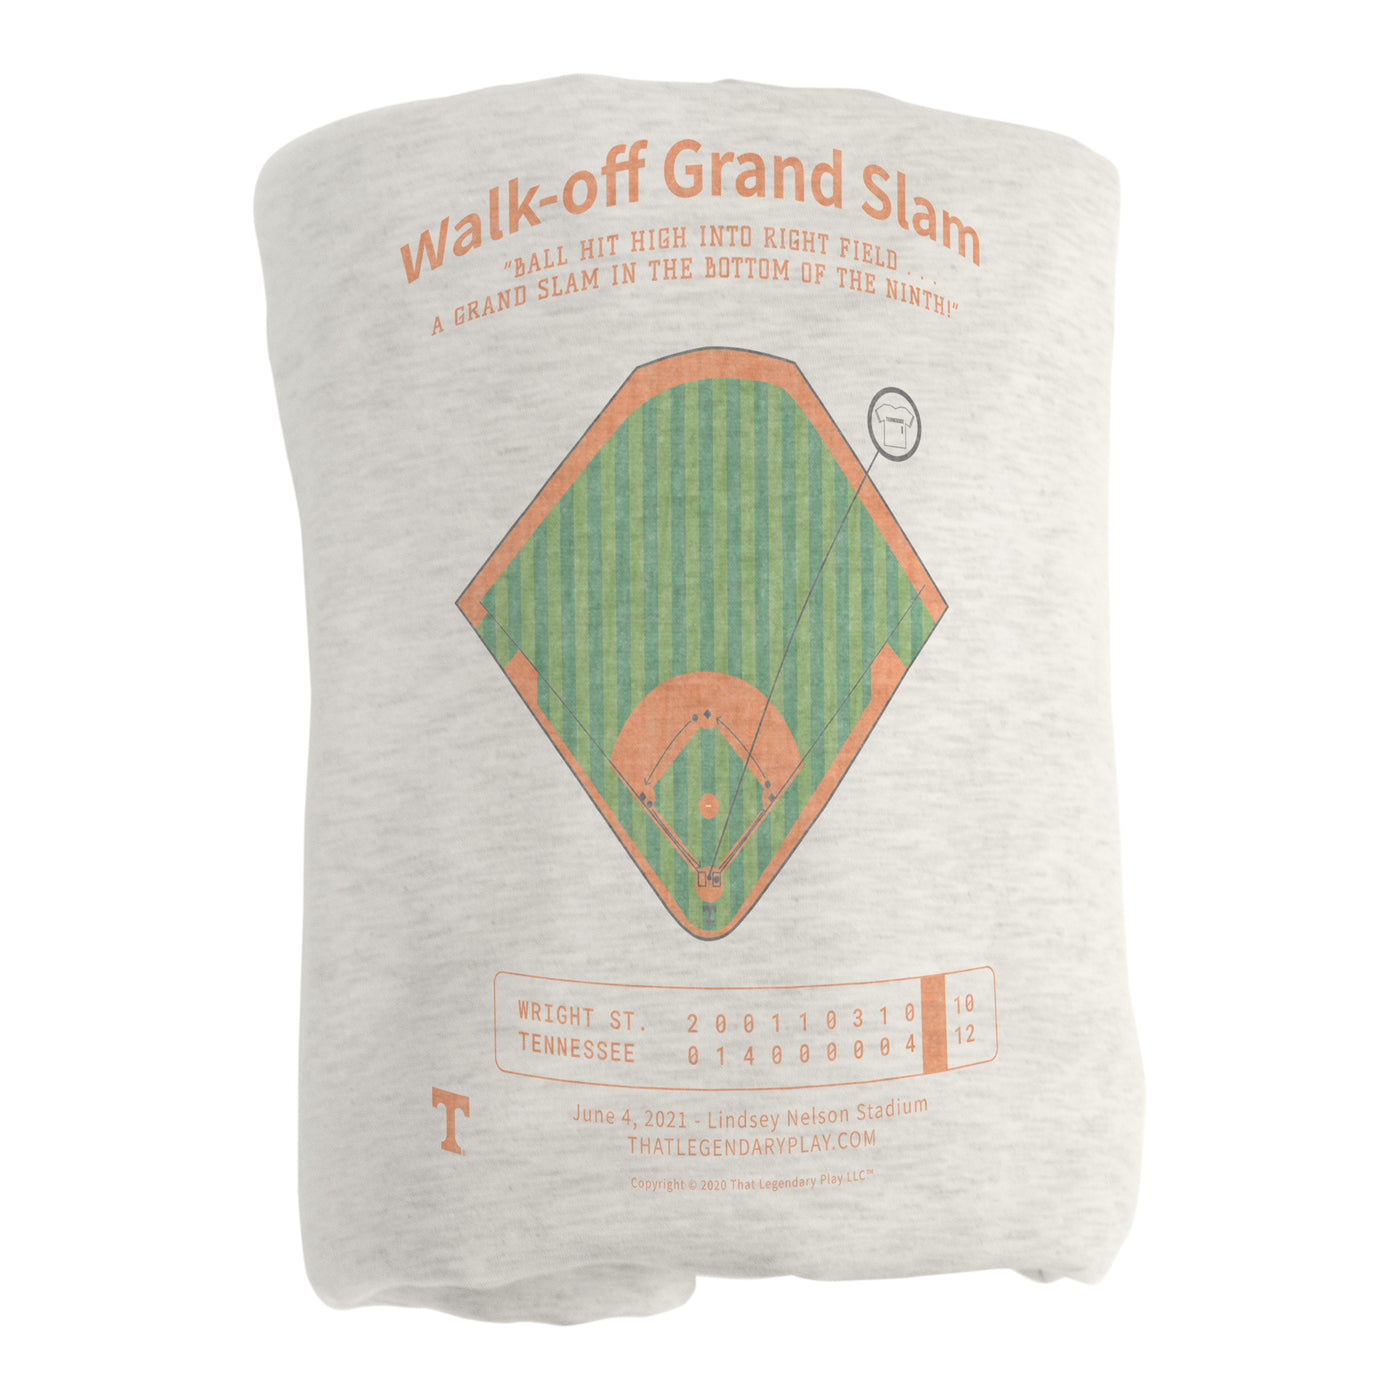 Tennessee Legendary Play Walk-off Grand Slam Sublimated Sweatshirt Blanket